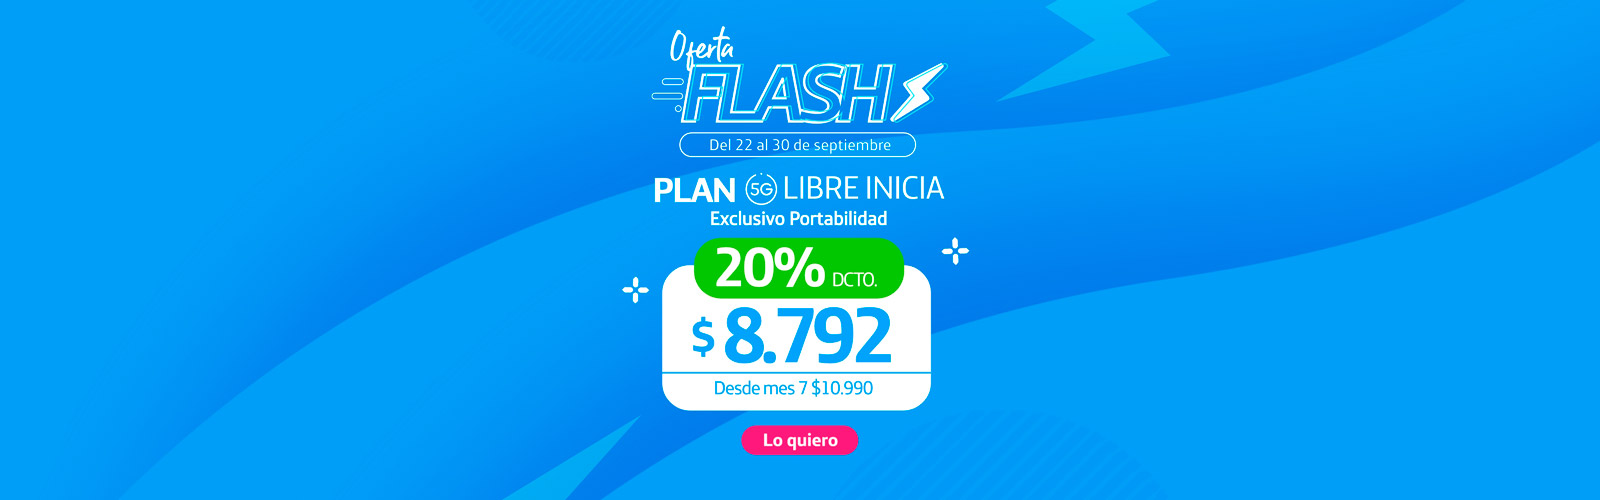 Oferta flash Plan Libre Inicia